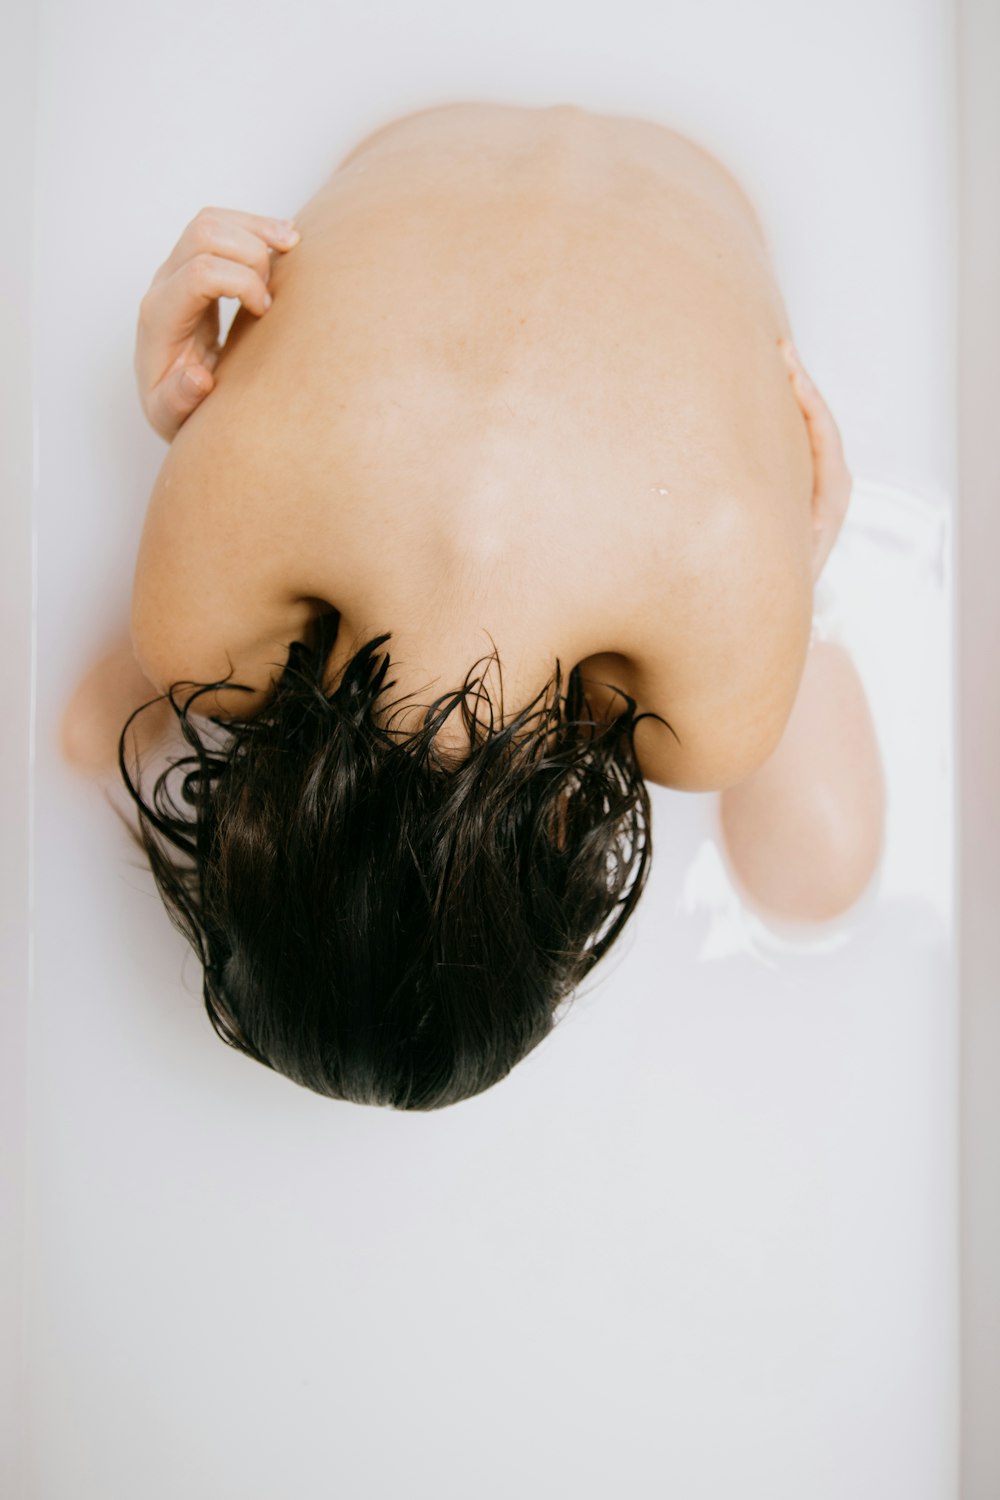 womans head on white bathtub